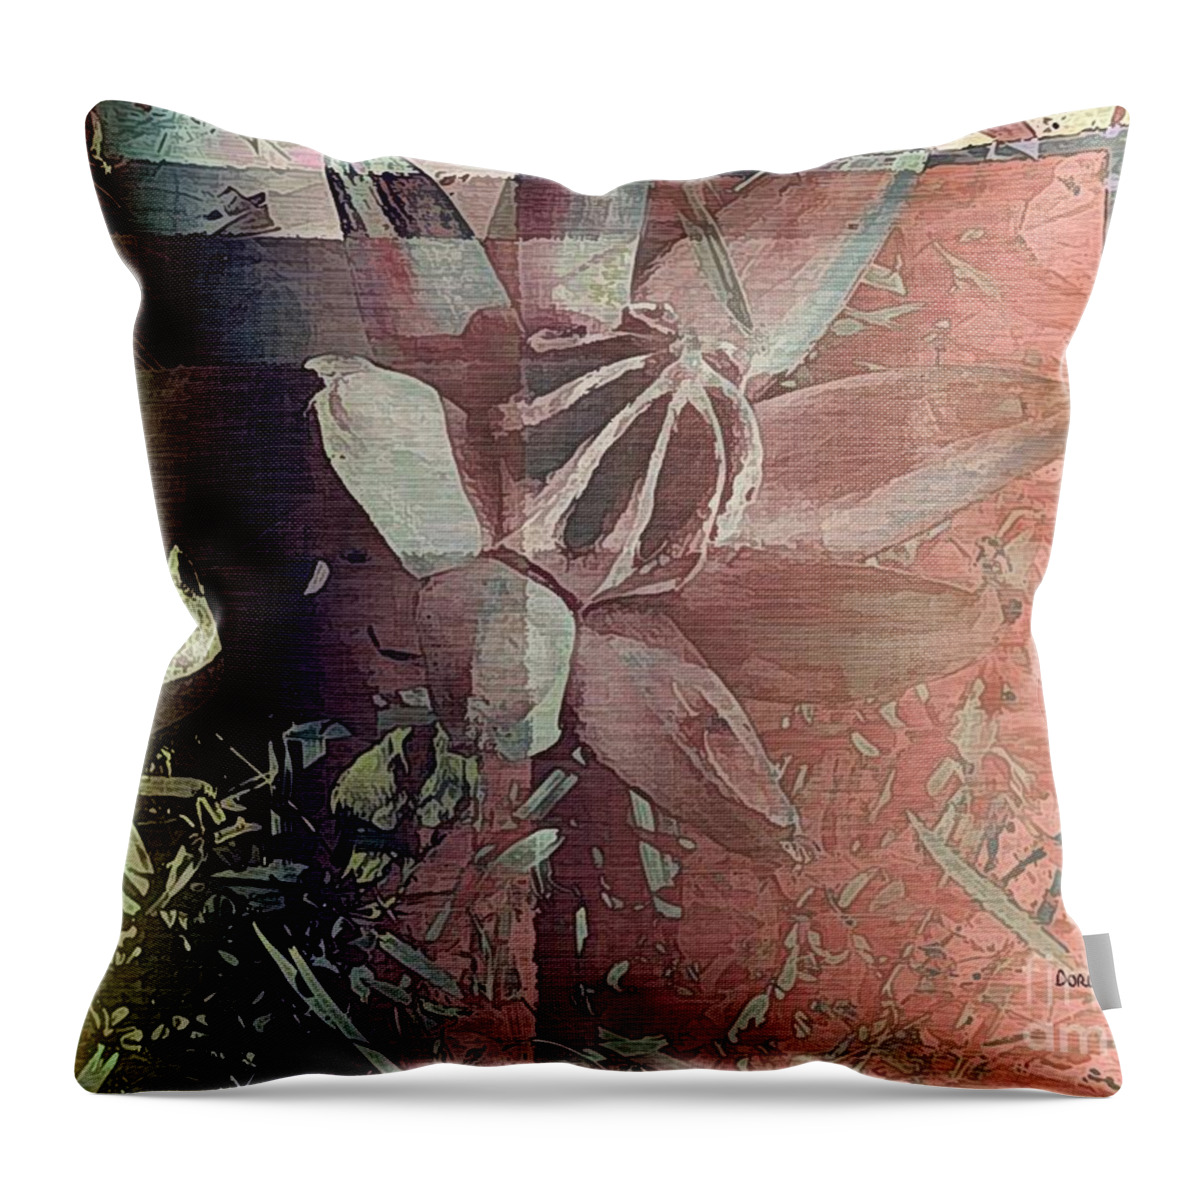 Hawaii Throw Pillow featuring the digital art Seed Pod by Dorlea Ho